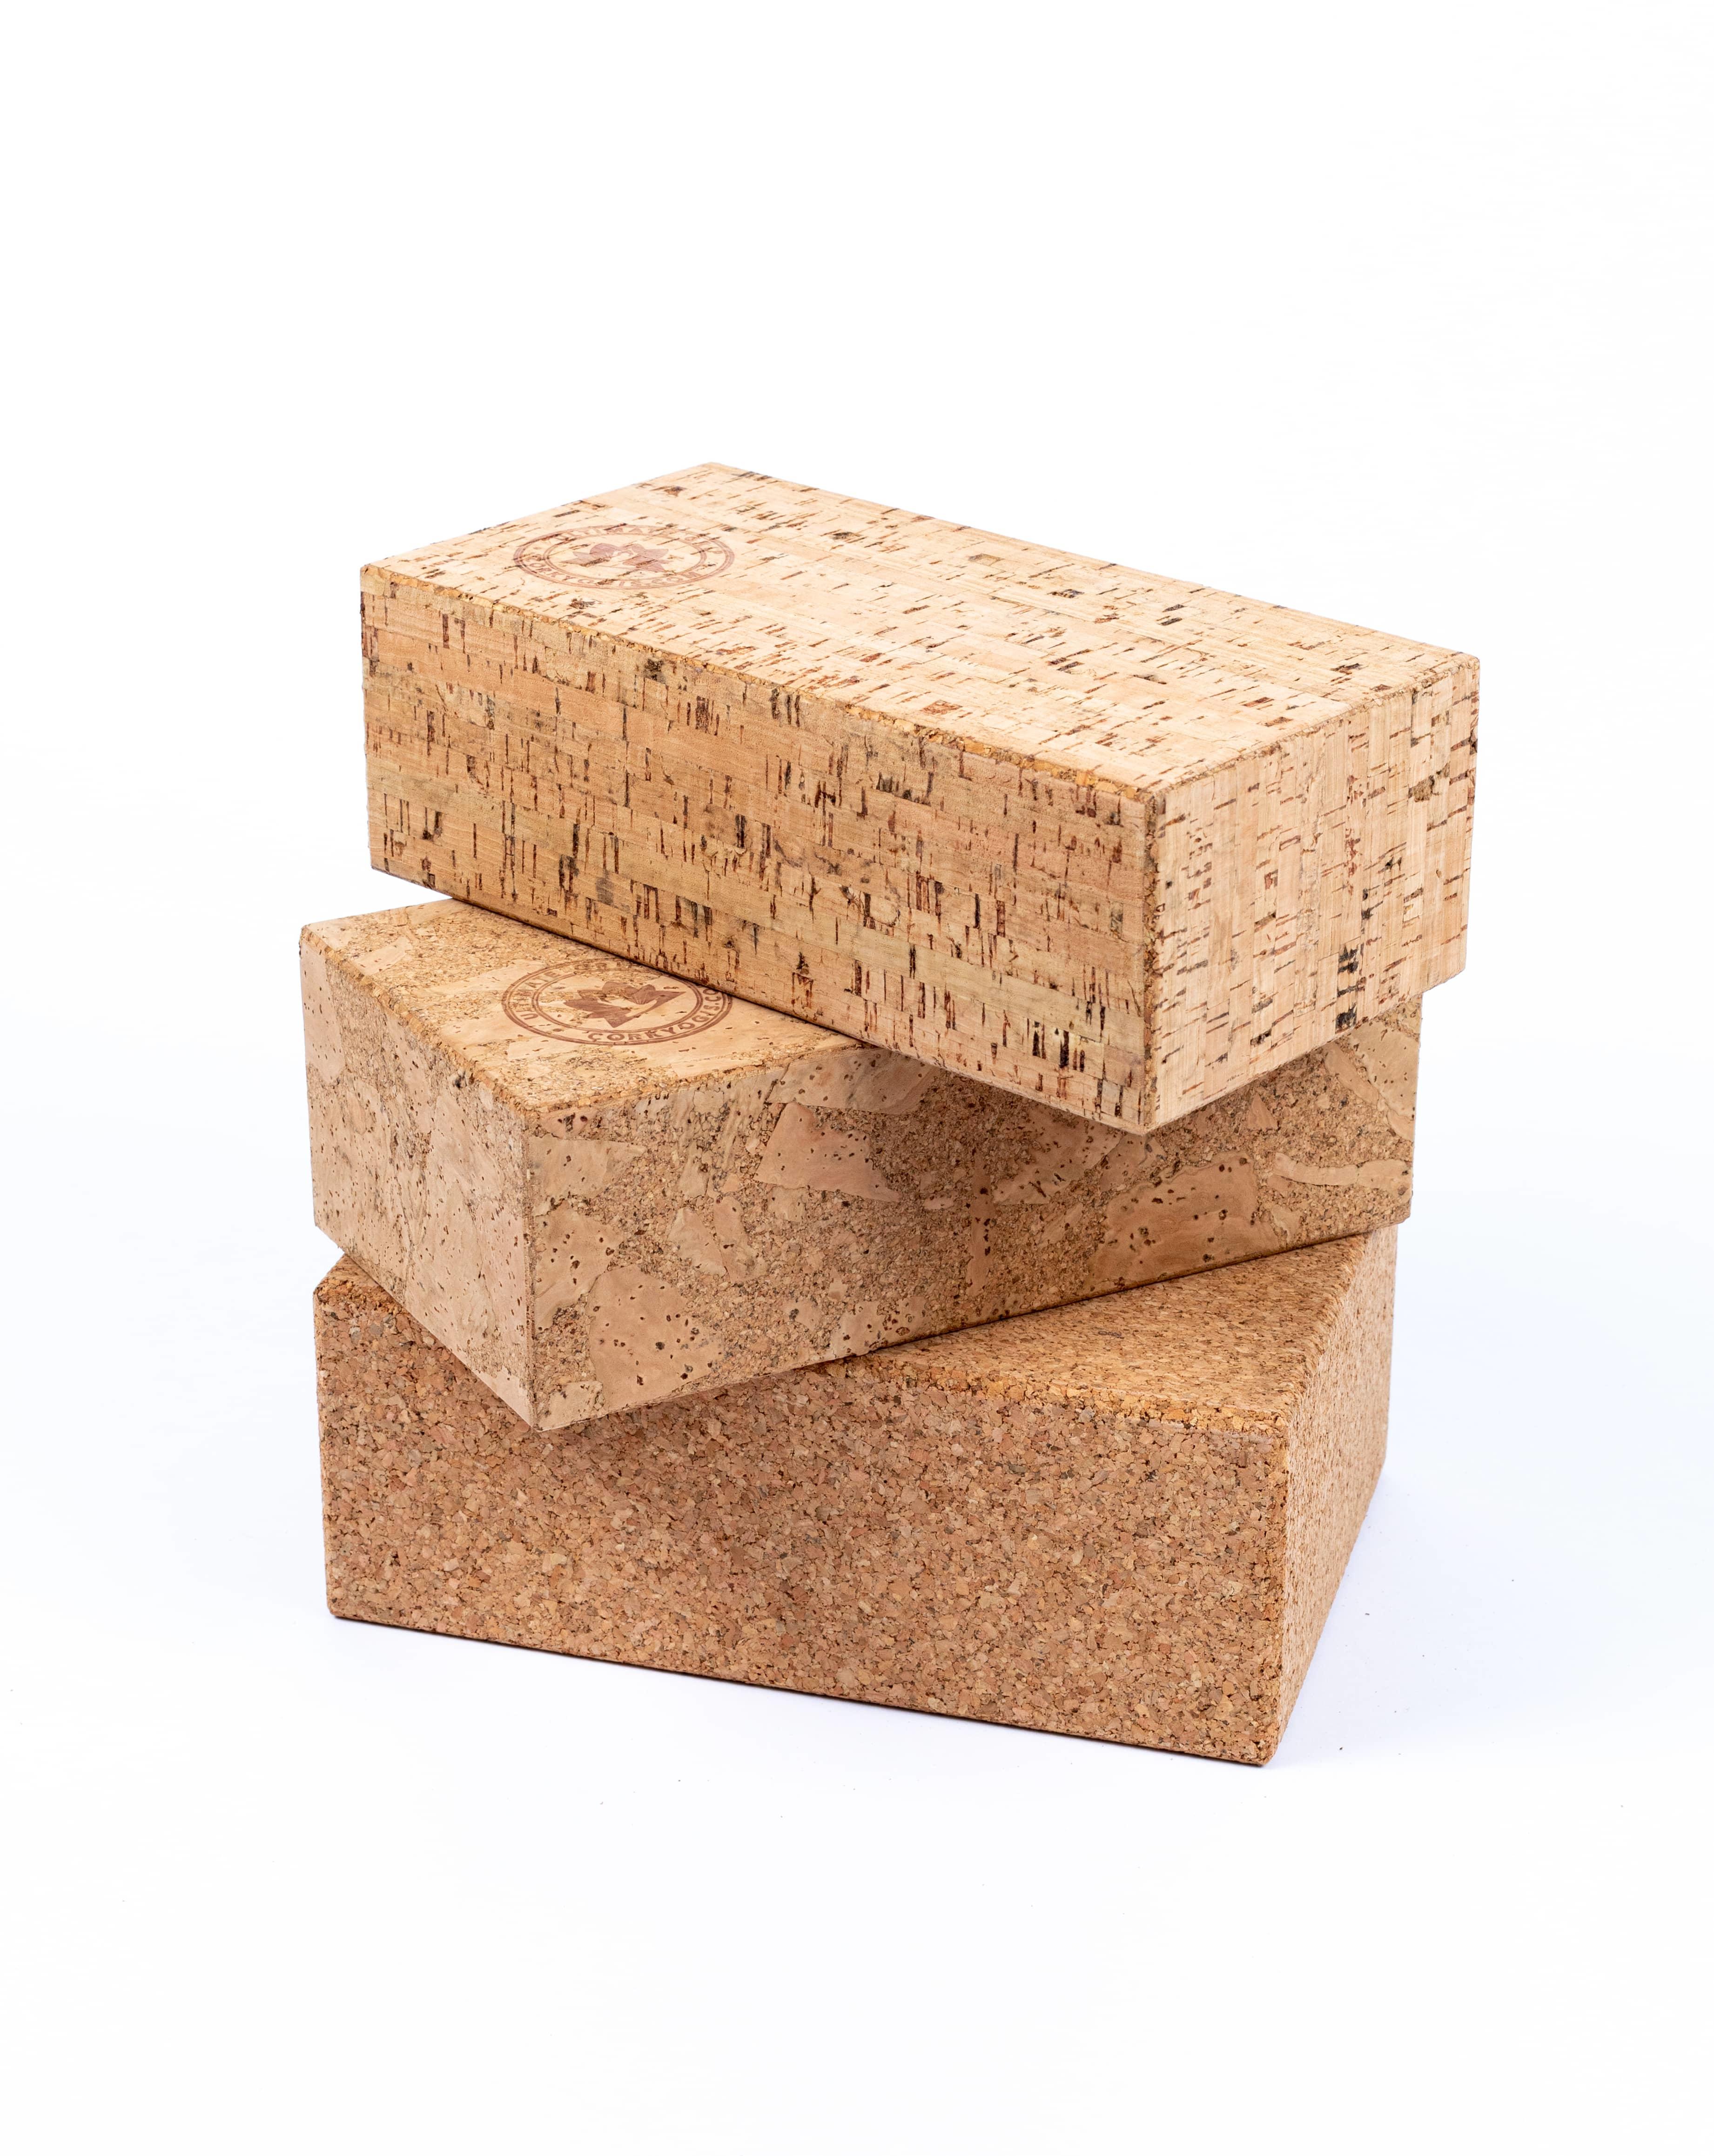 Cork Yoga Blocks